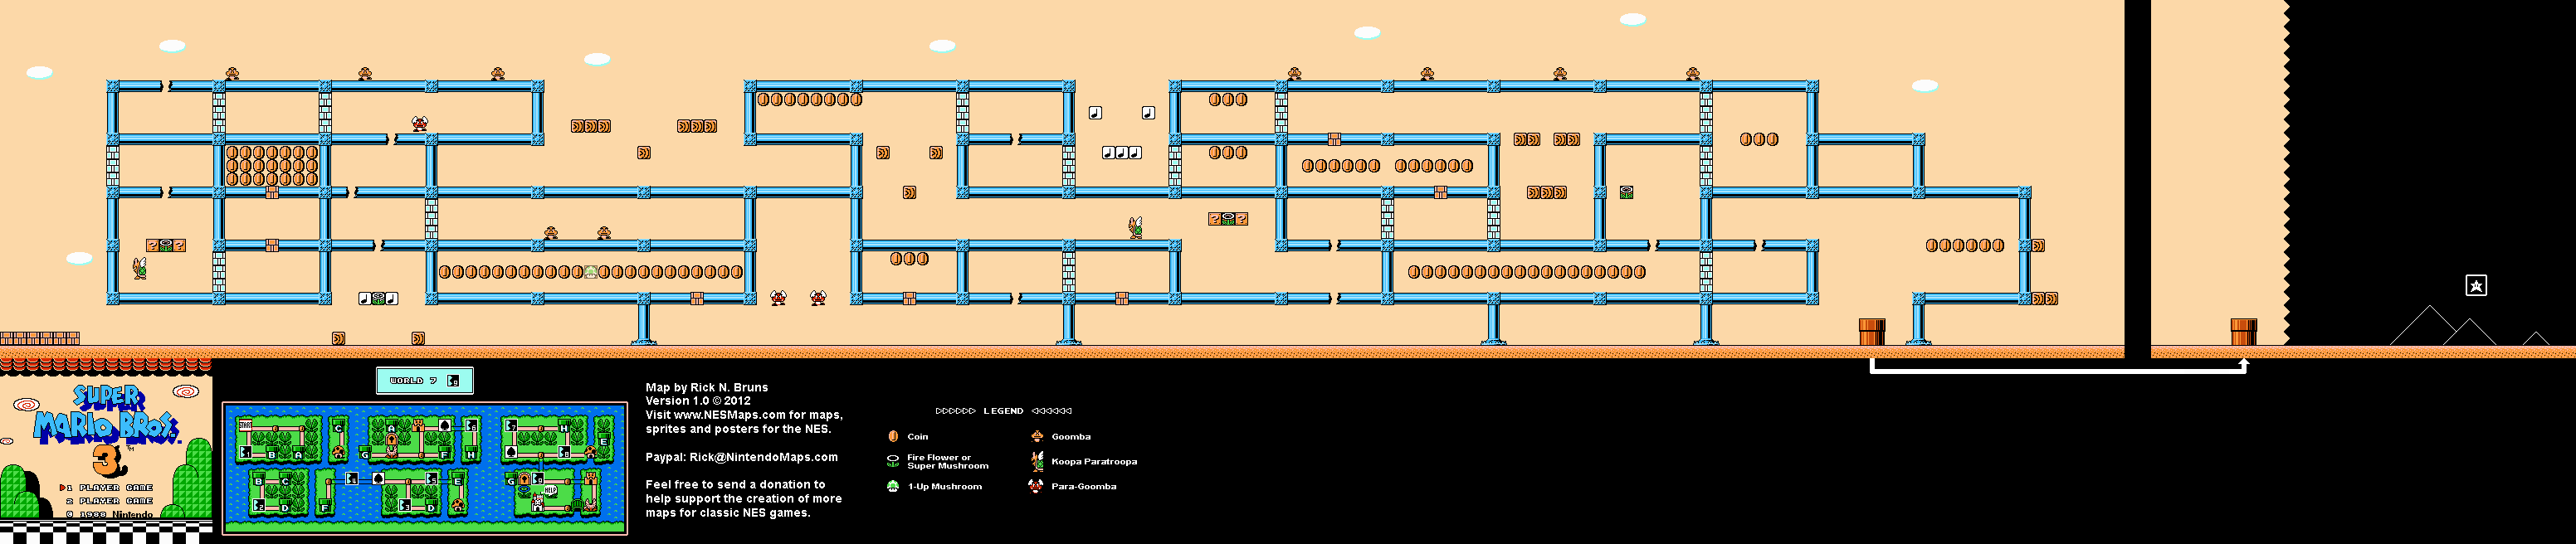 Super Mario Brothers 3 - World 7-9 Nintendo NES Map